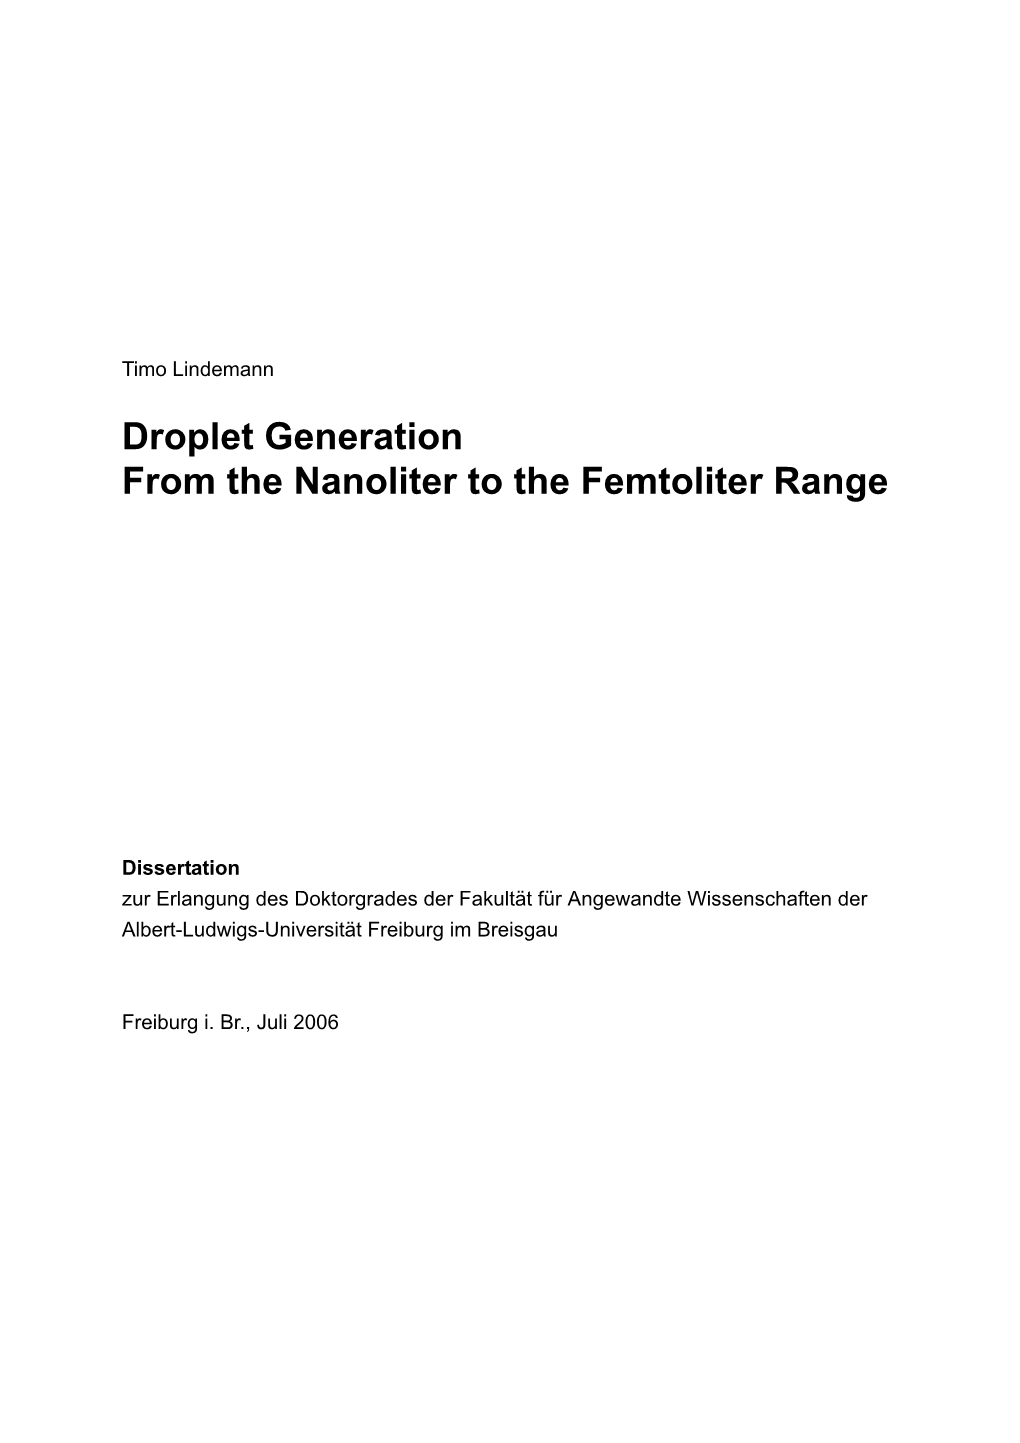 Droplet Generation from the Nanoliter to the Femtoliter Range